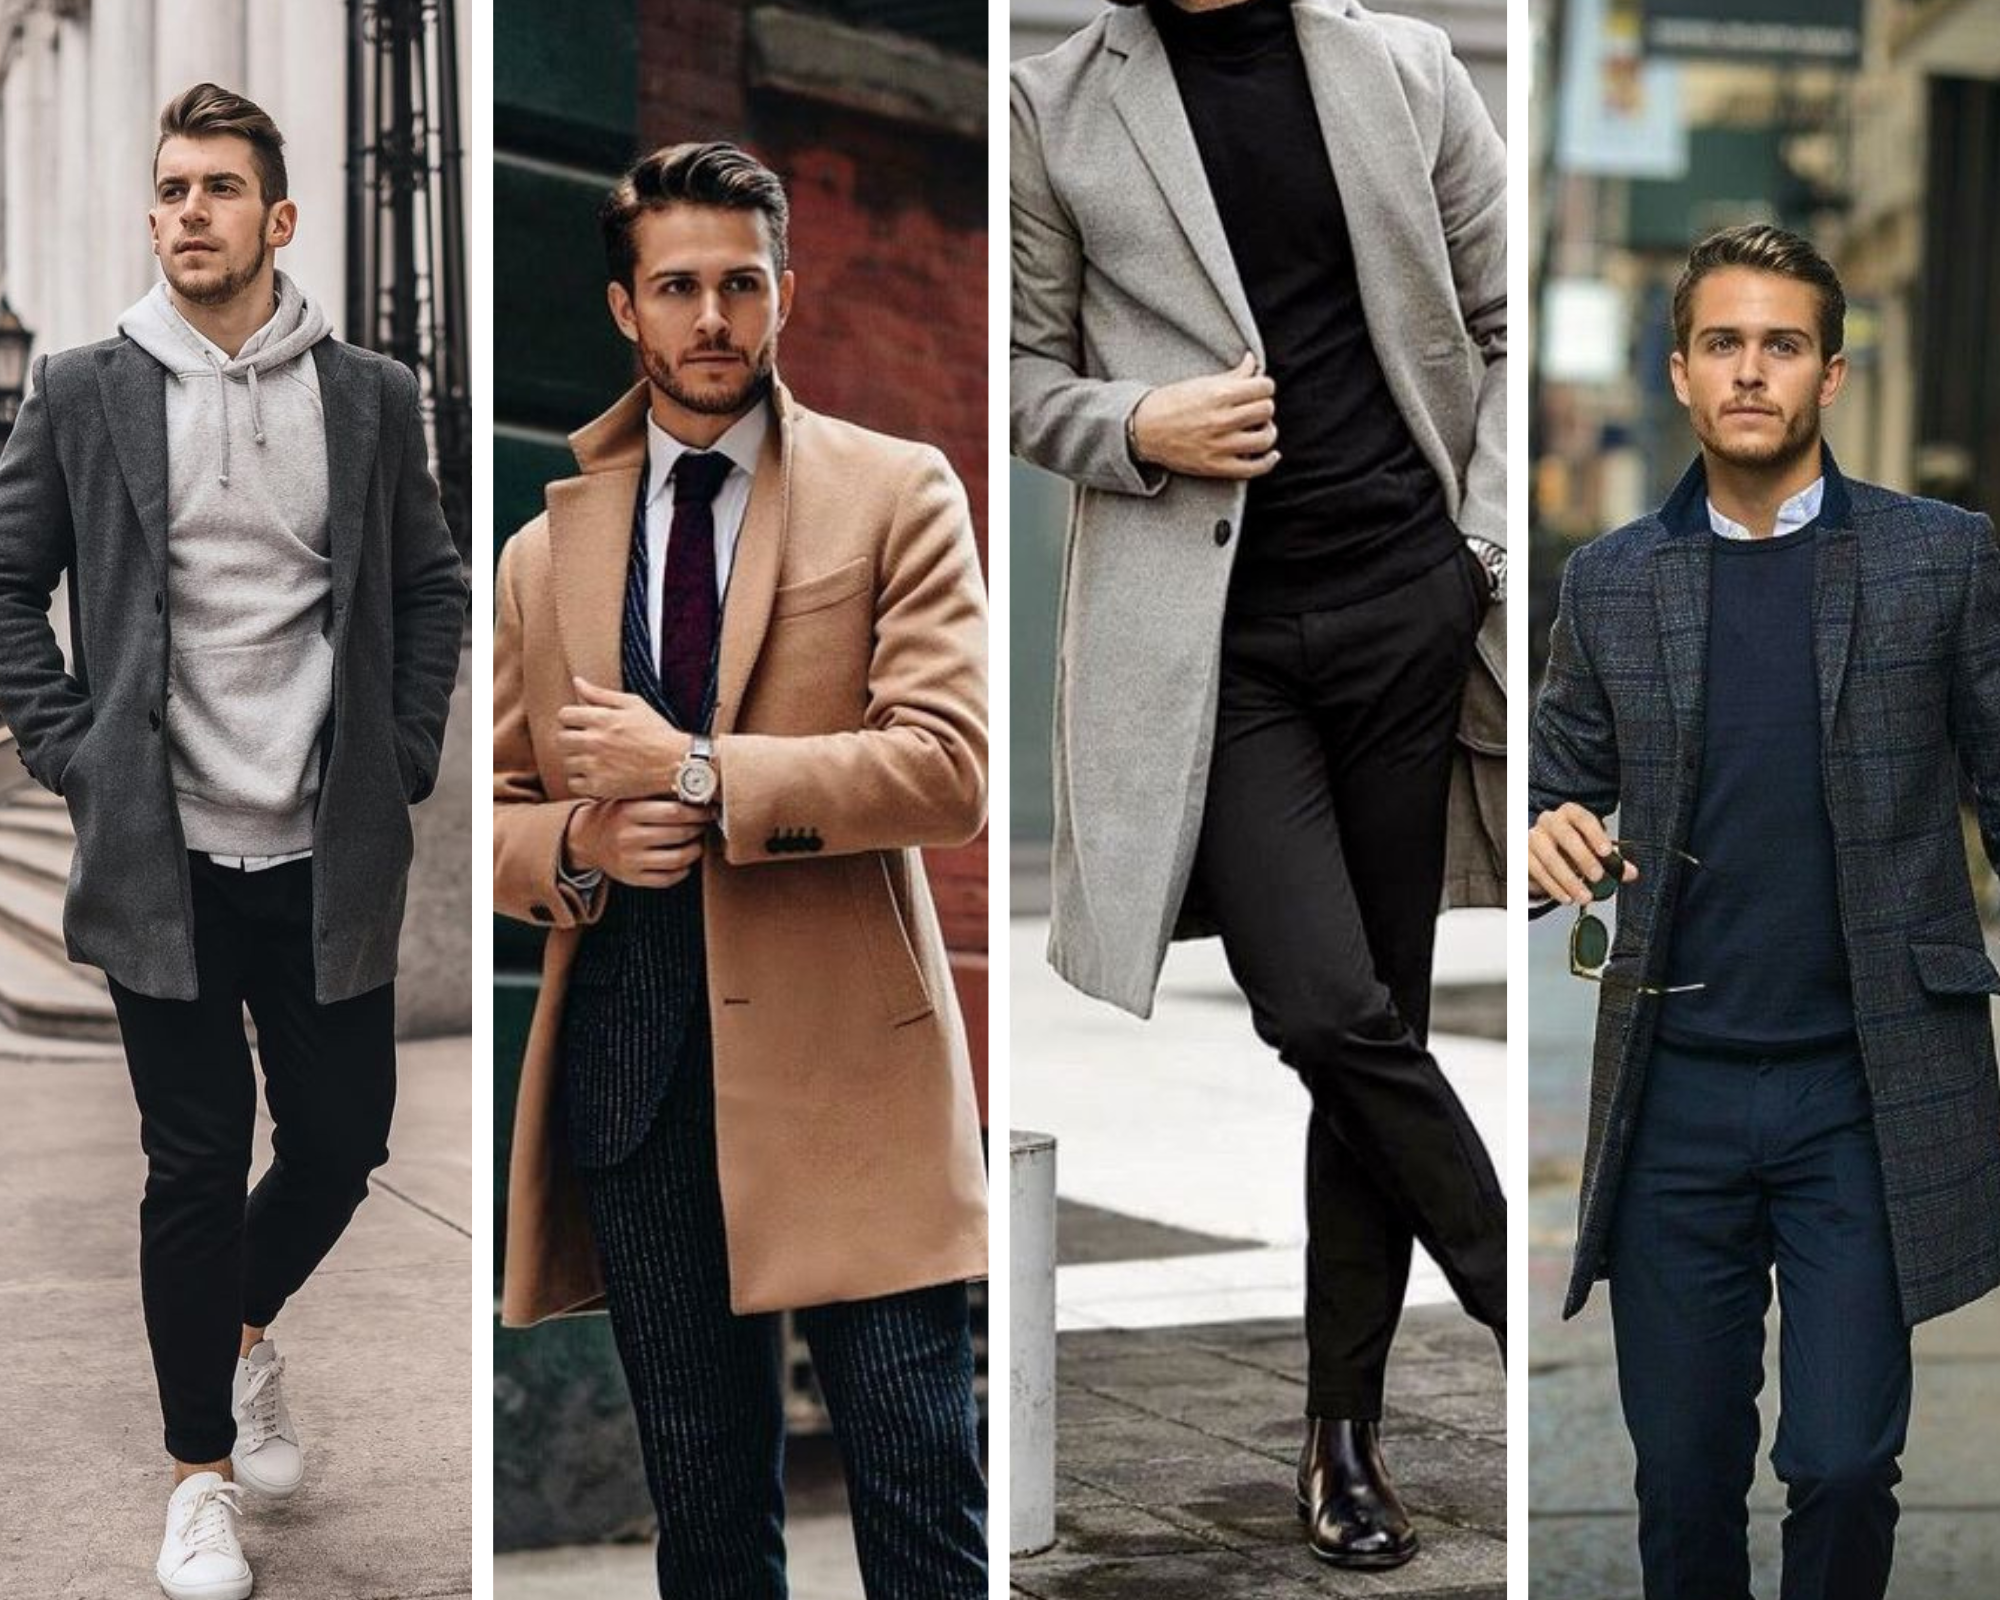 Stylist Q&A: How do I wear an overcoat? - Men style 